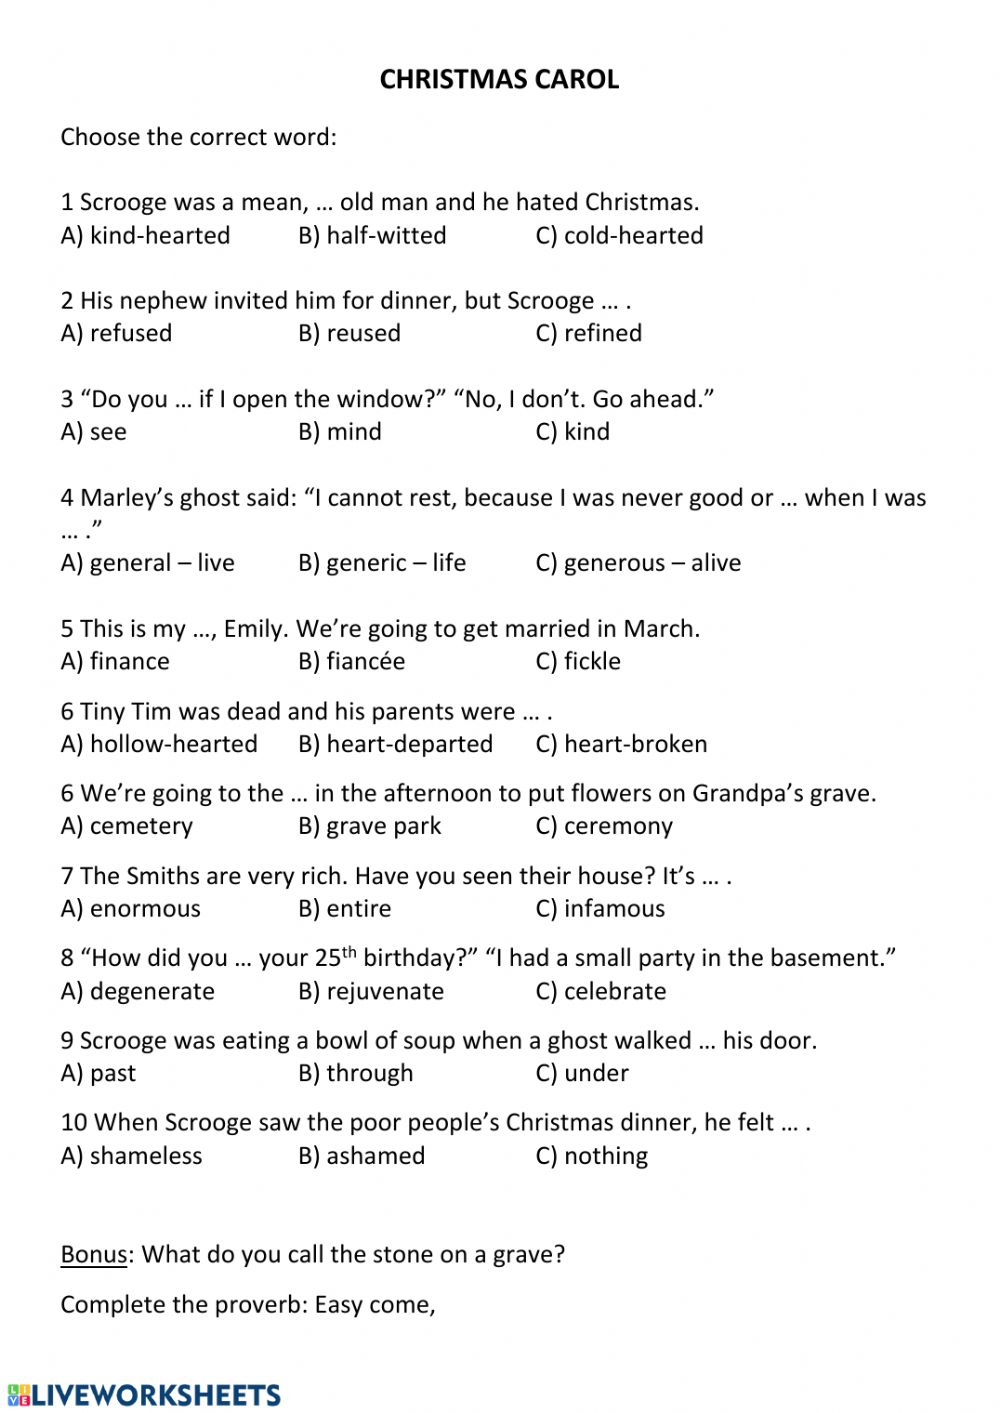 Christmas Carol - Vocabulary Worksheet